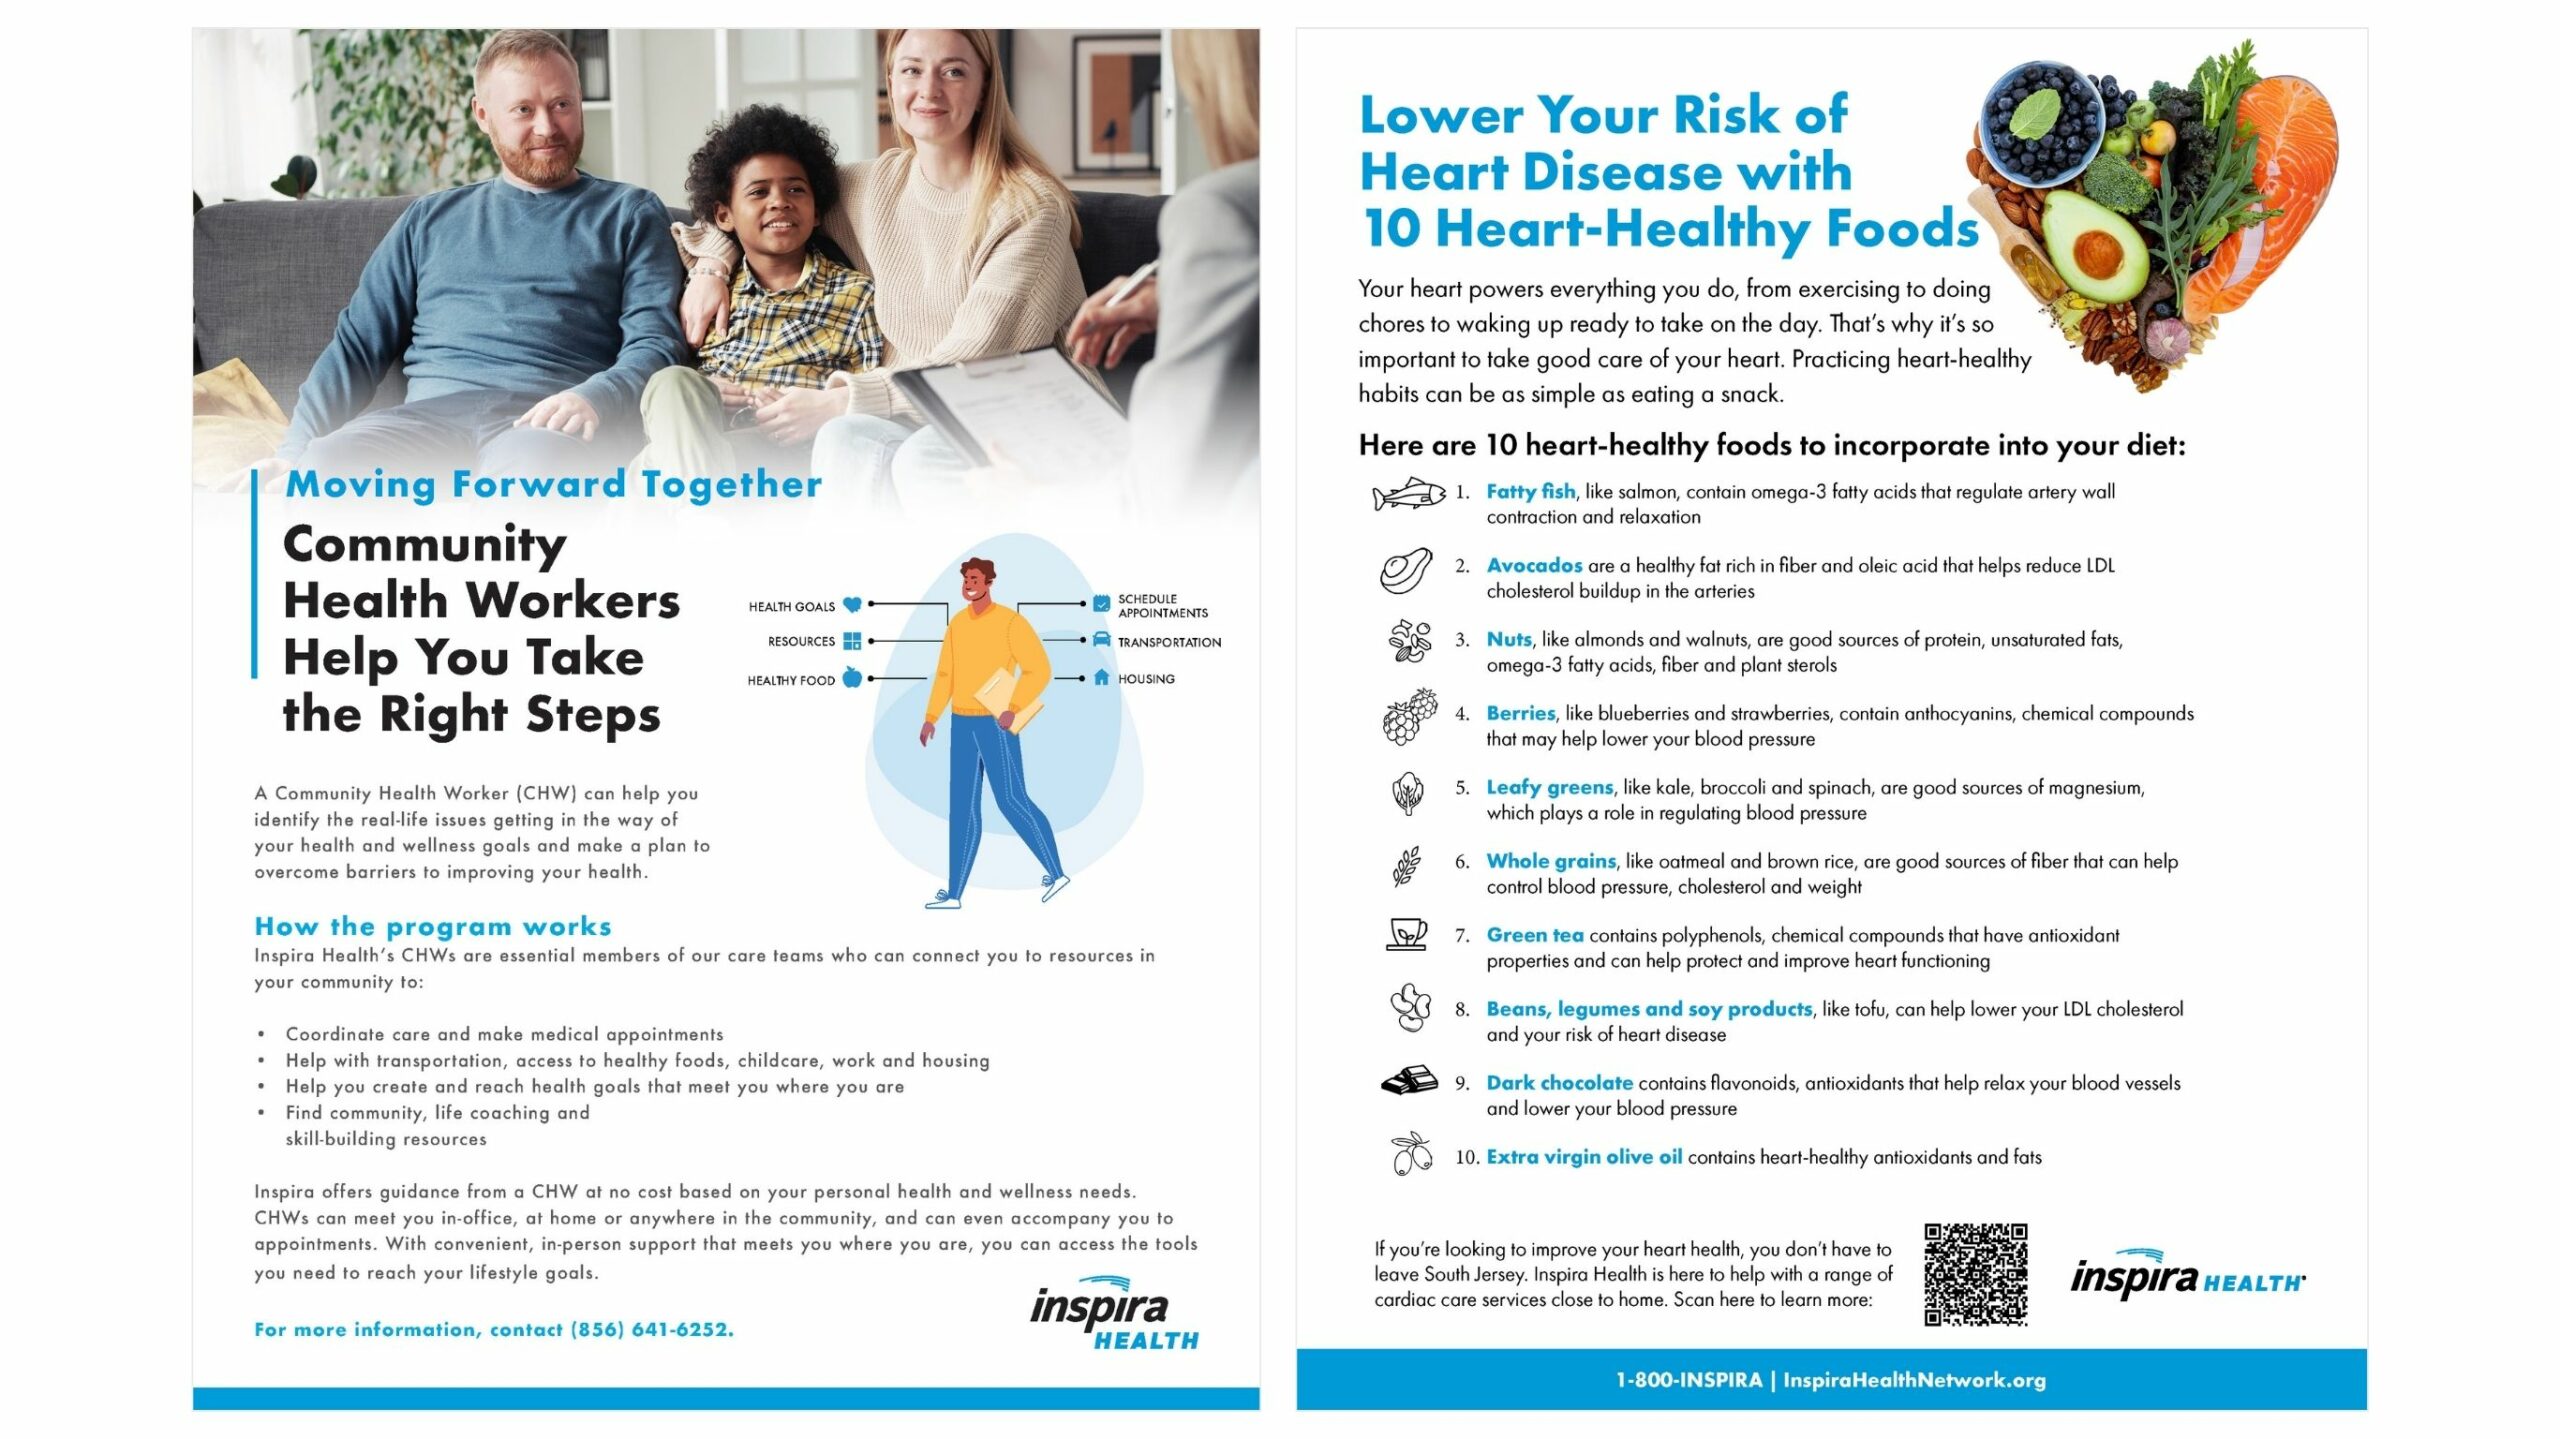 Mockup of flyers for Inspira Health Community Health Worker program